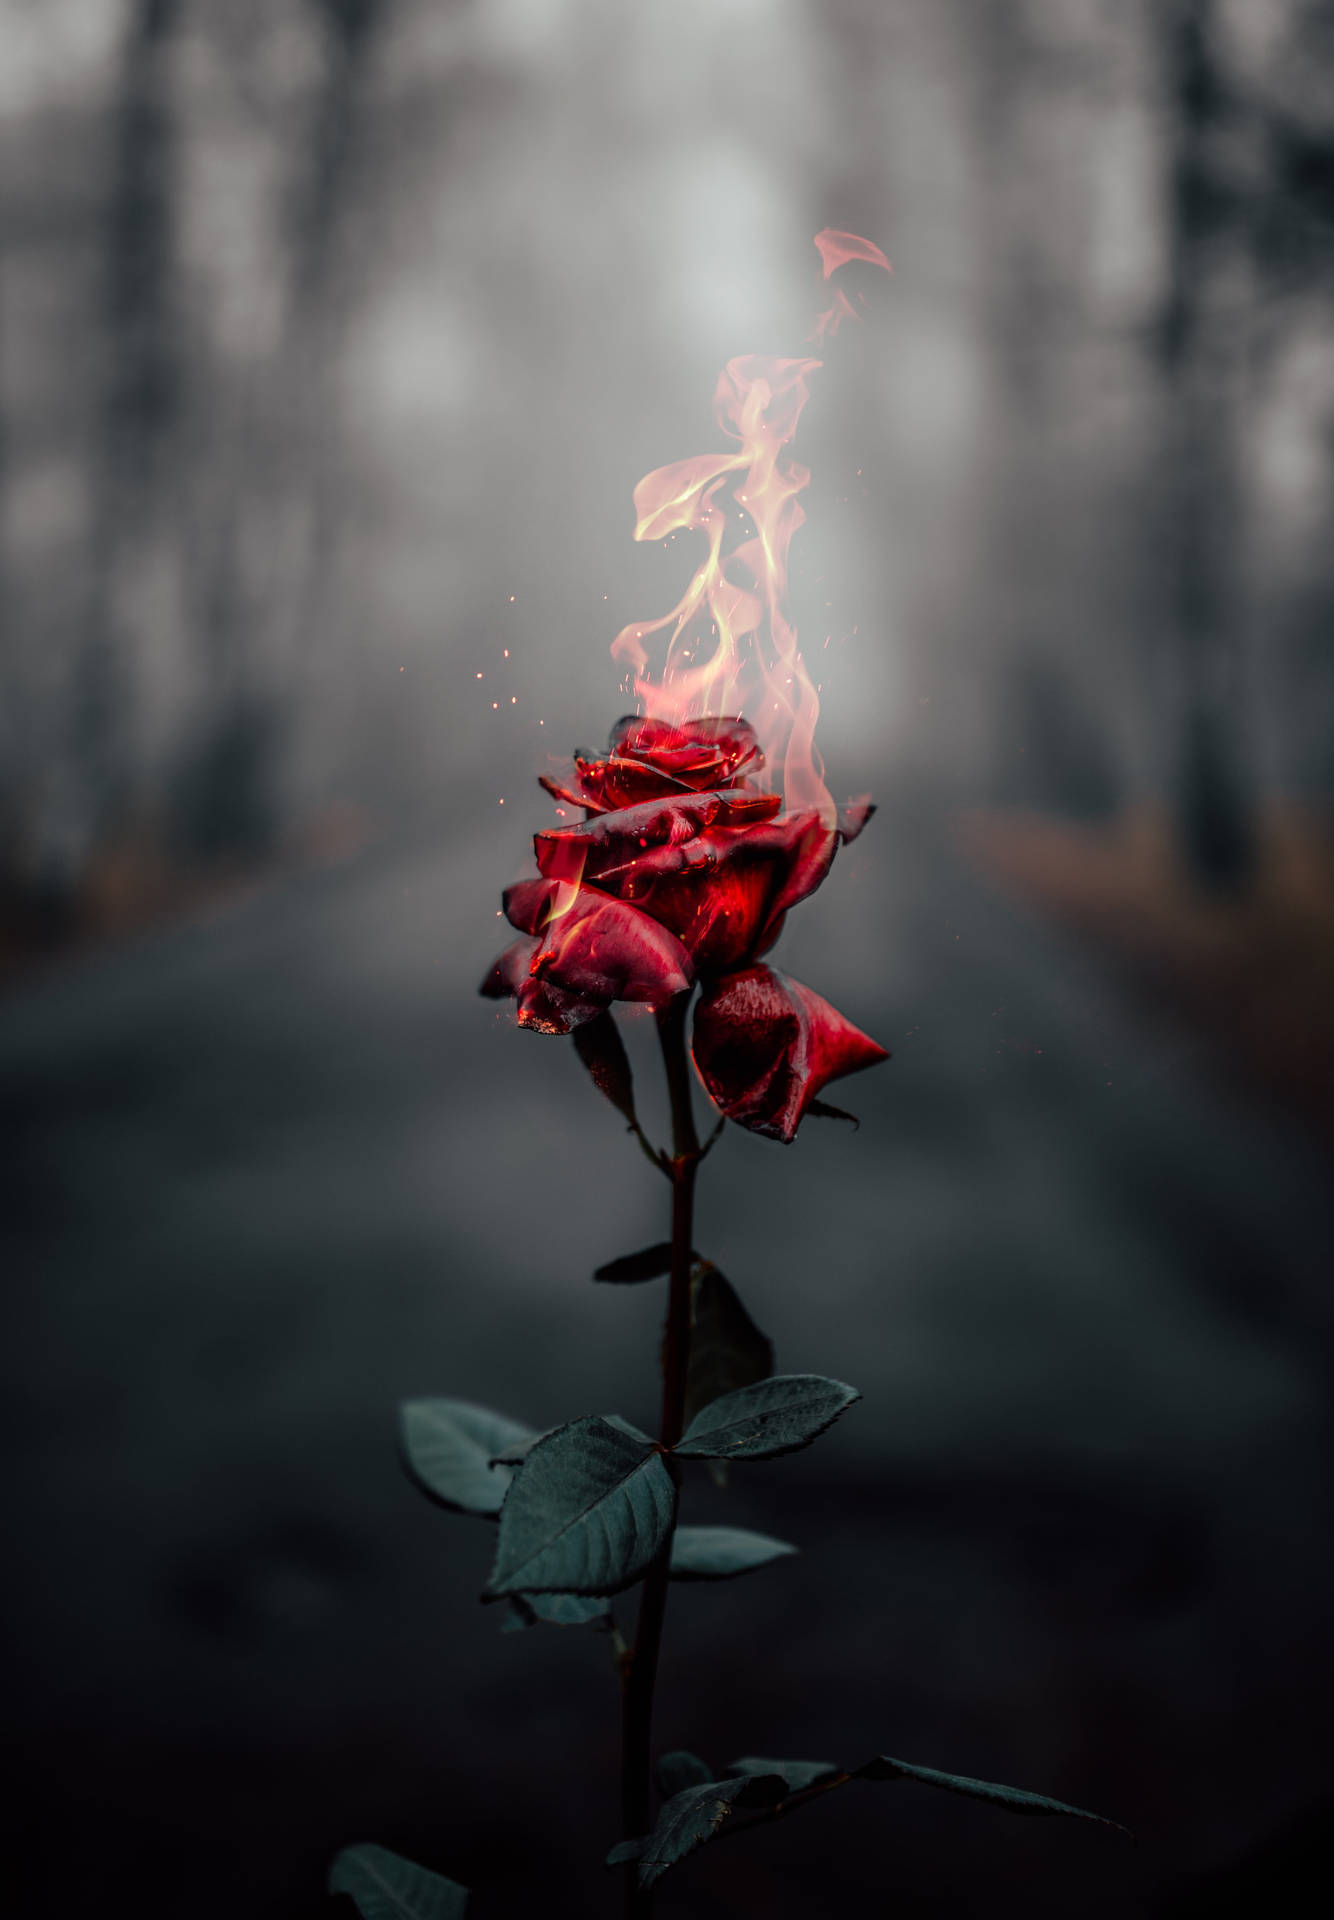 Fire Burning Rose Flower Mobile Background